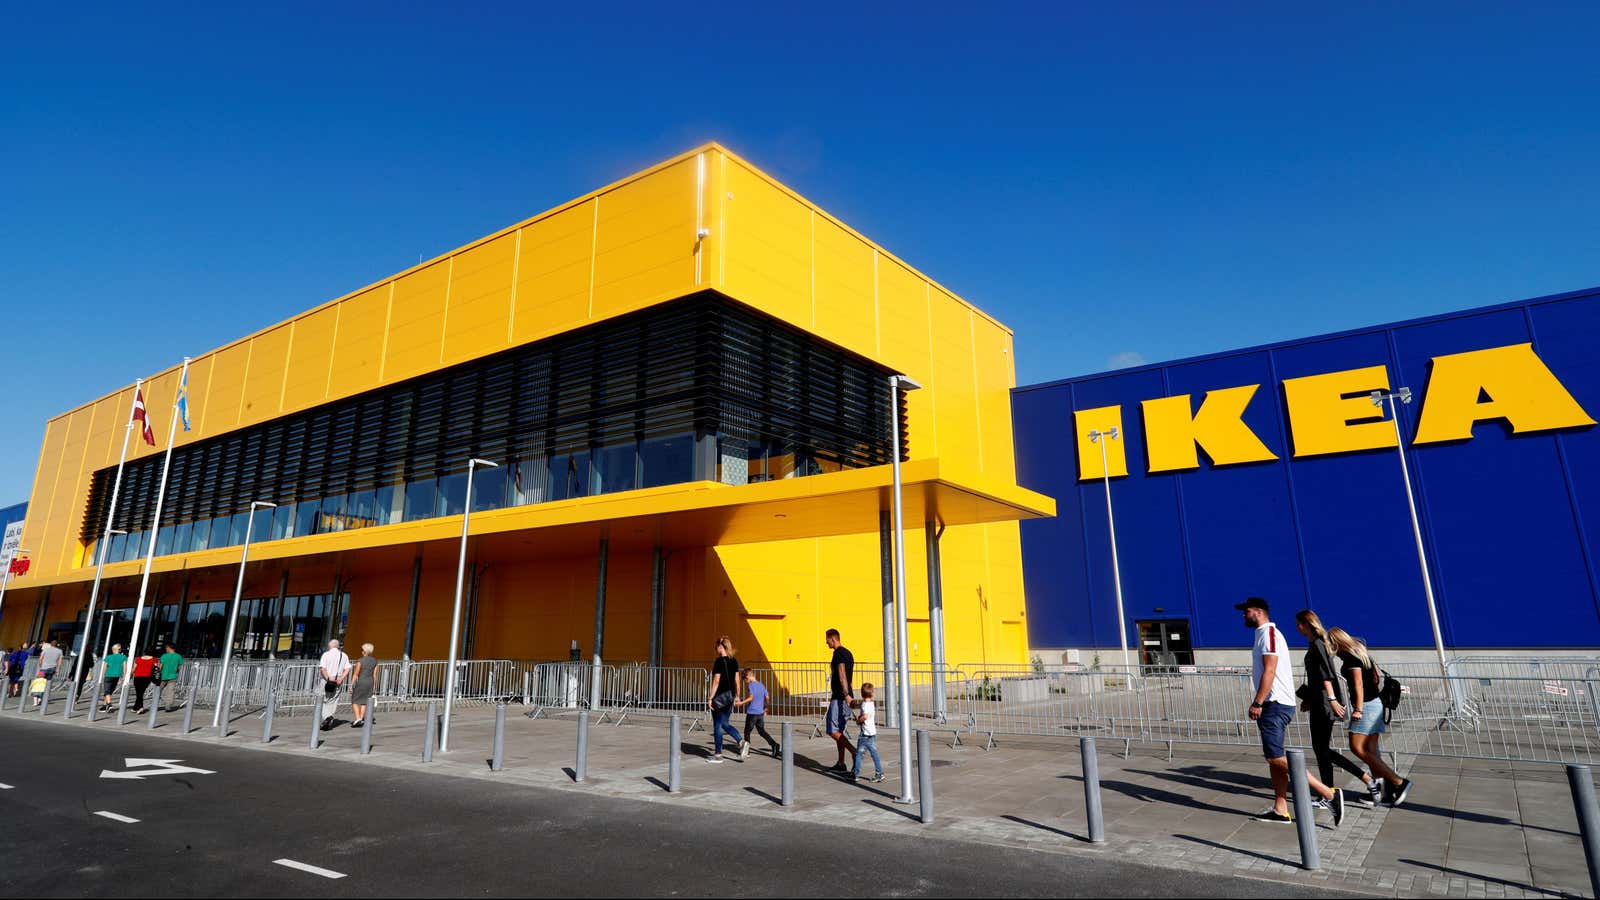 A recently opened IKEA in Riga, Latvia.